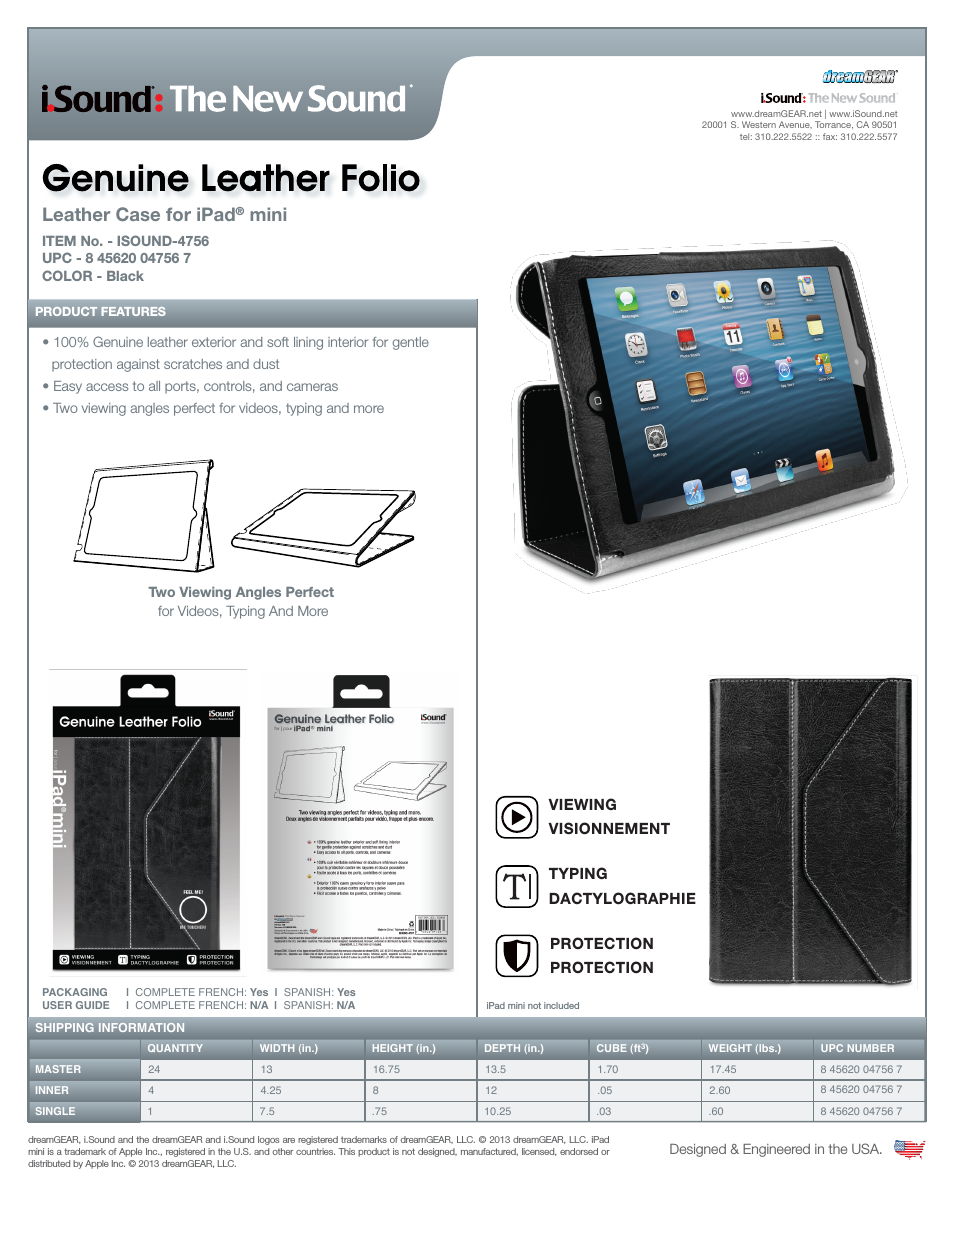 Genuine Leather Folio for iPadmini - Sell Sheet